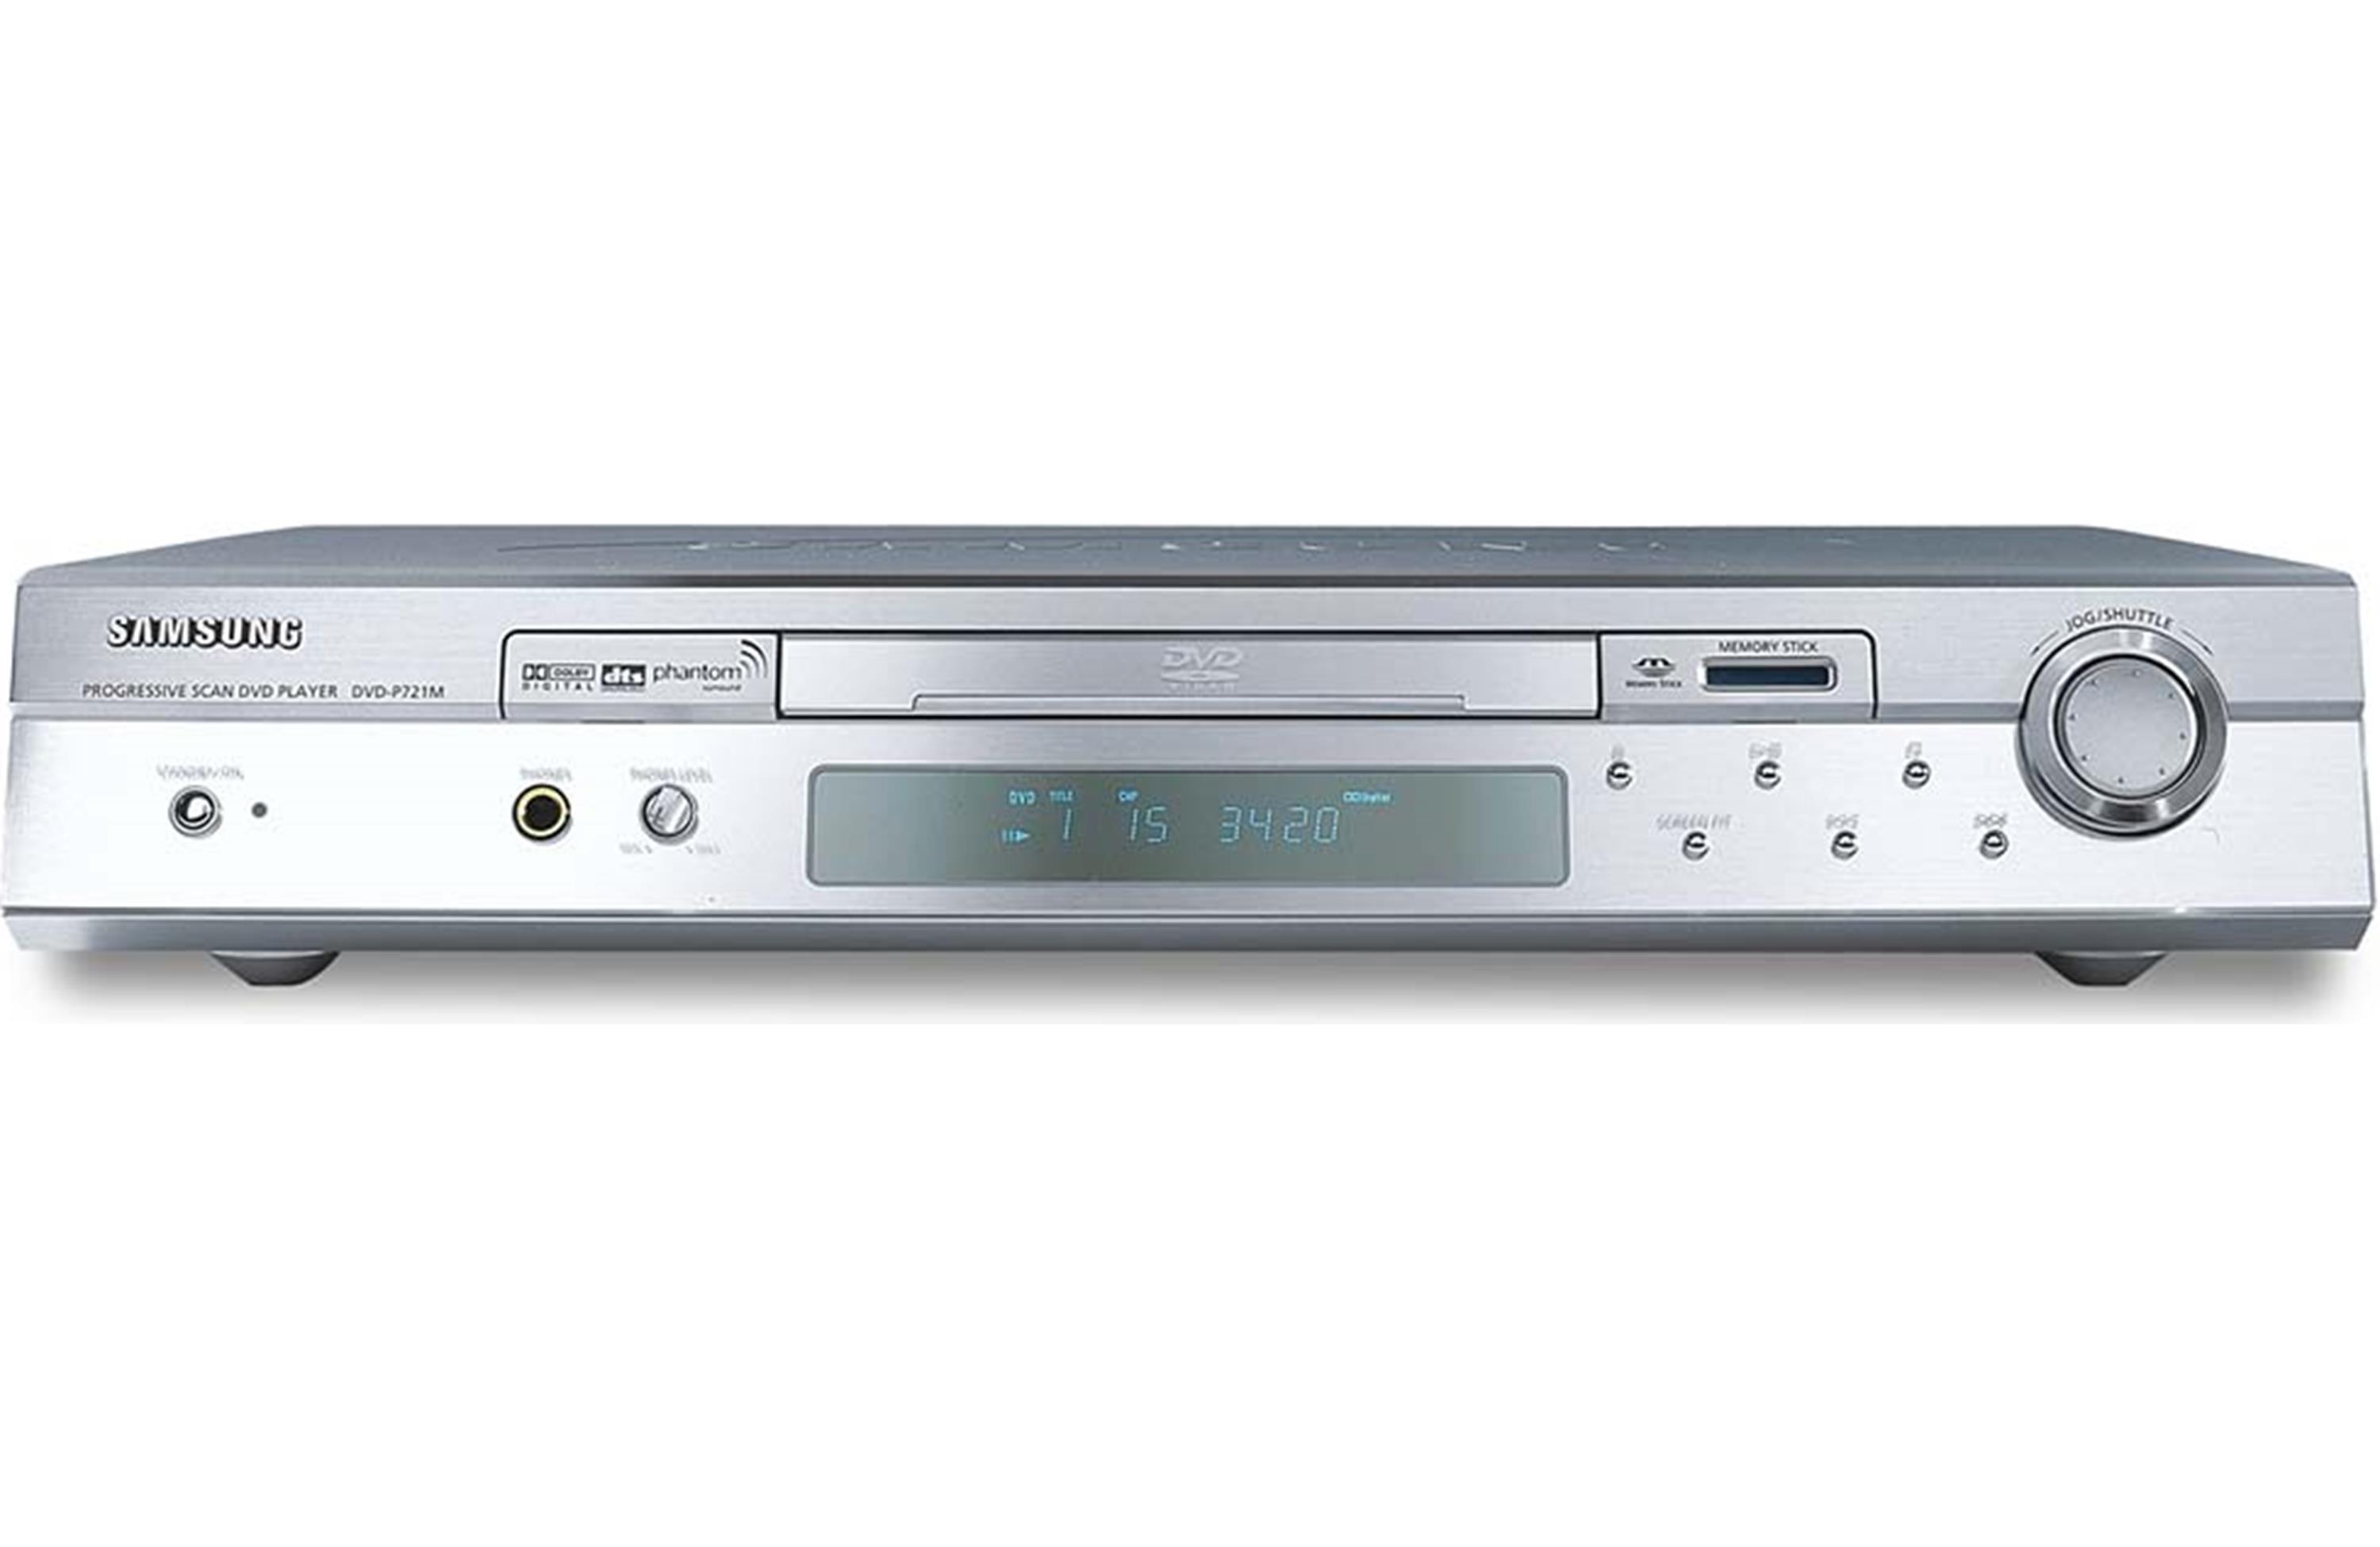 Samsung DVDP721M Dvd-p721m DVD/cd Player With Progressive Scan - Samsung Parts USA